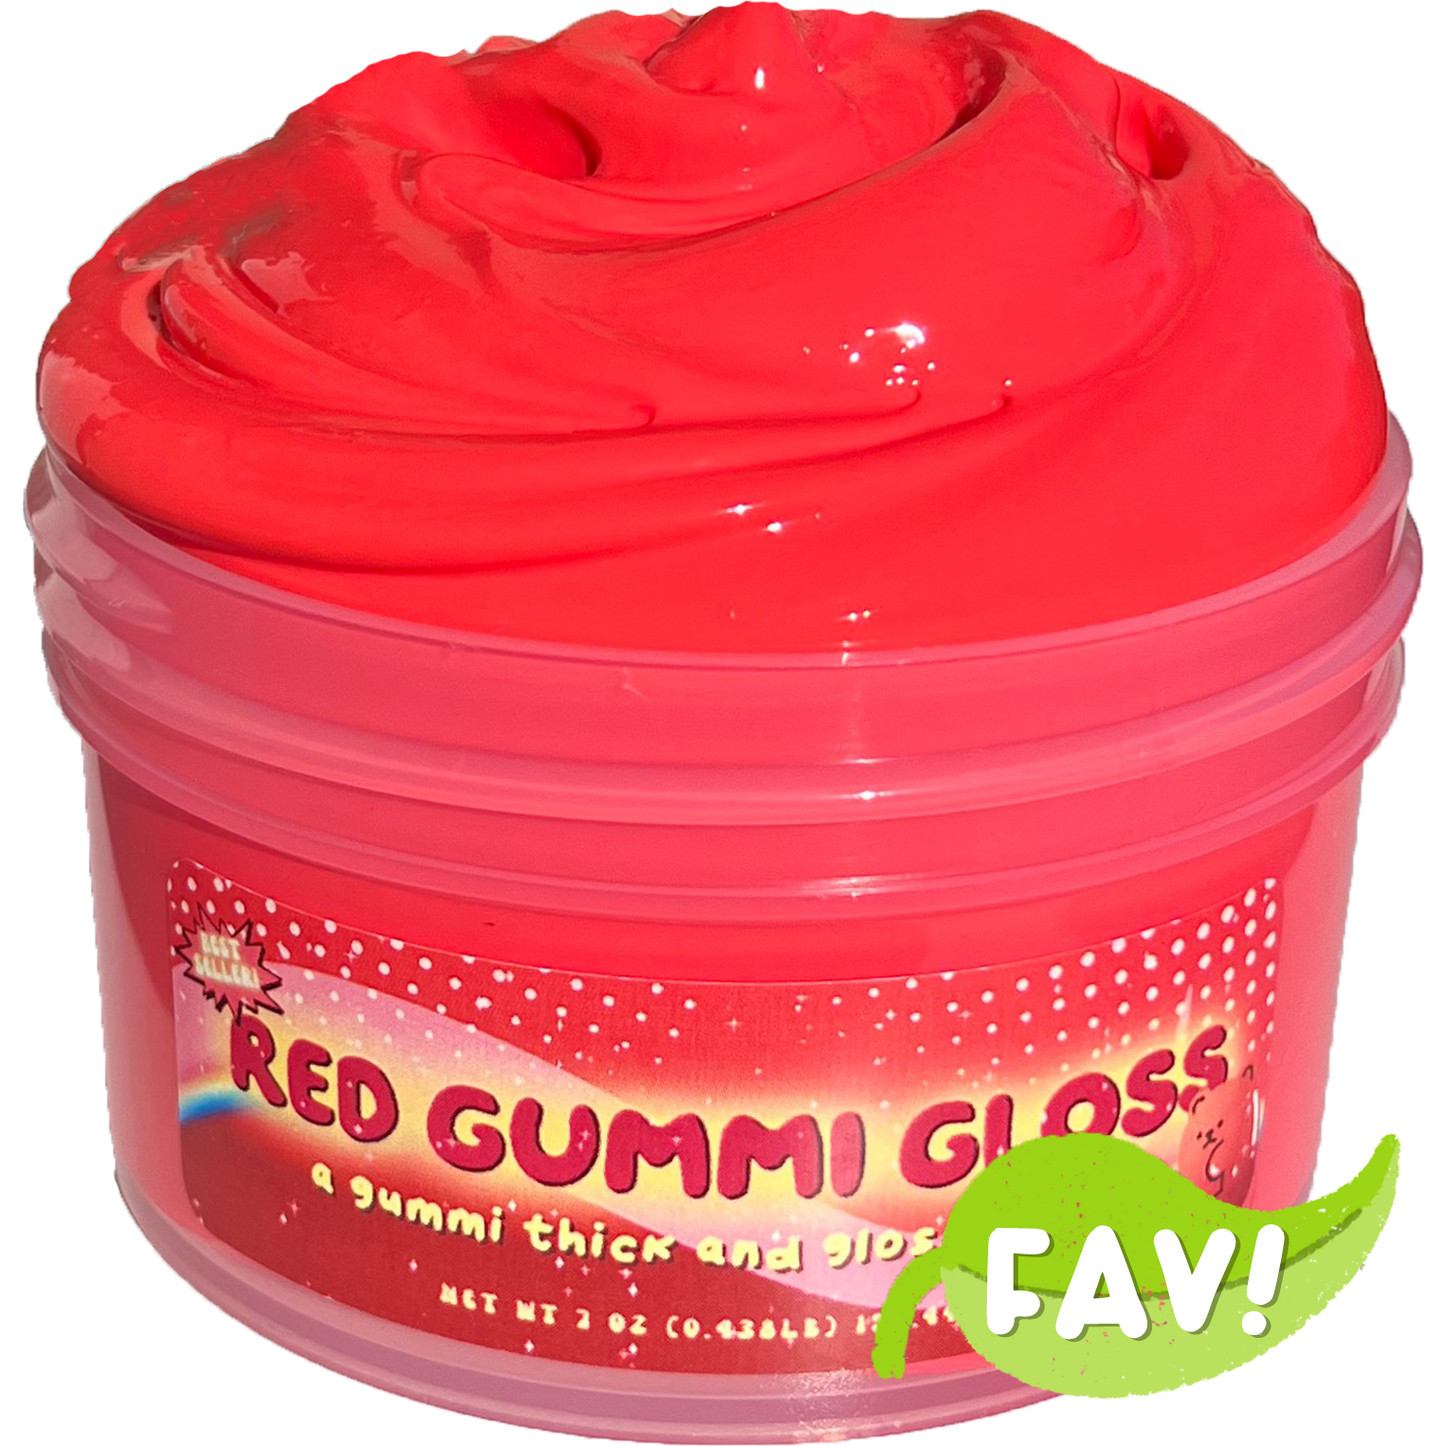 Red Gummi Gloss